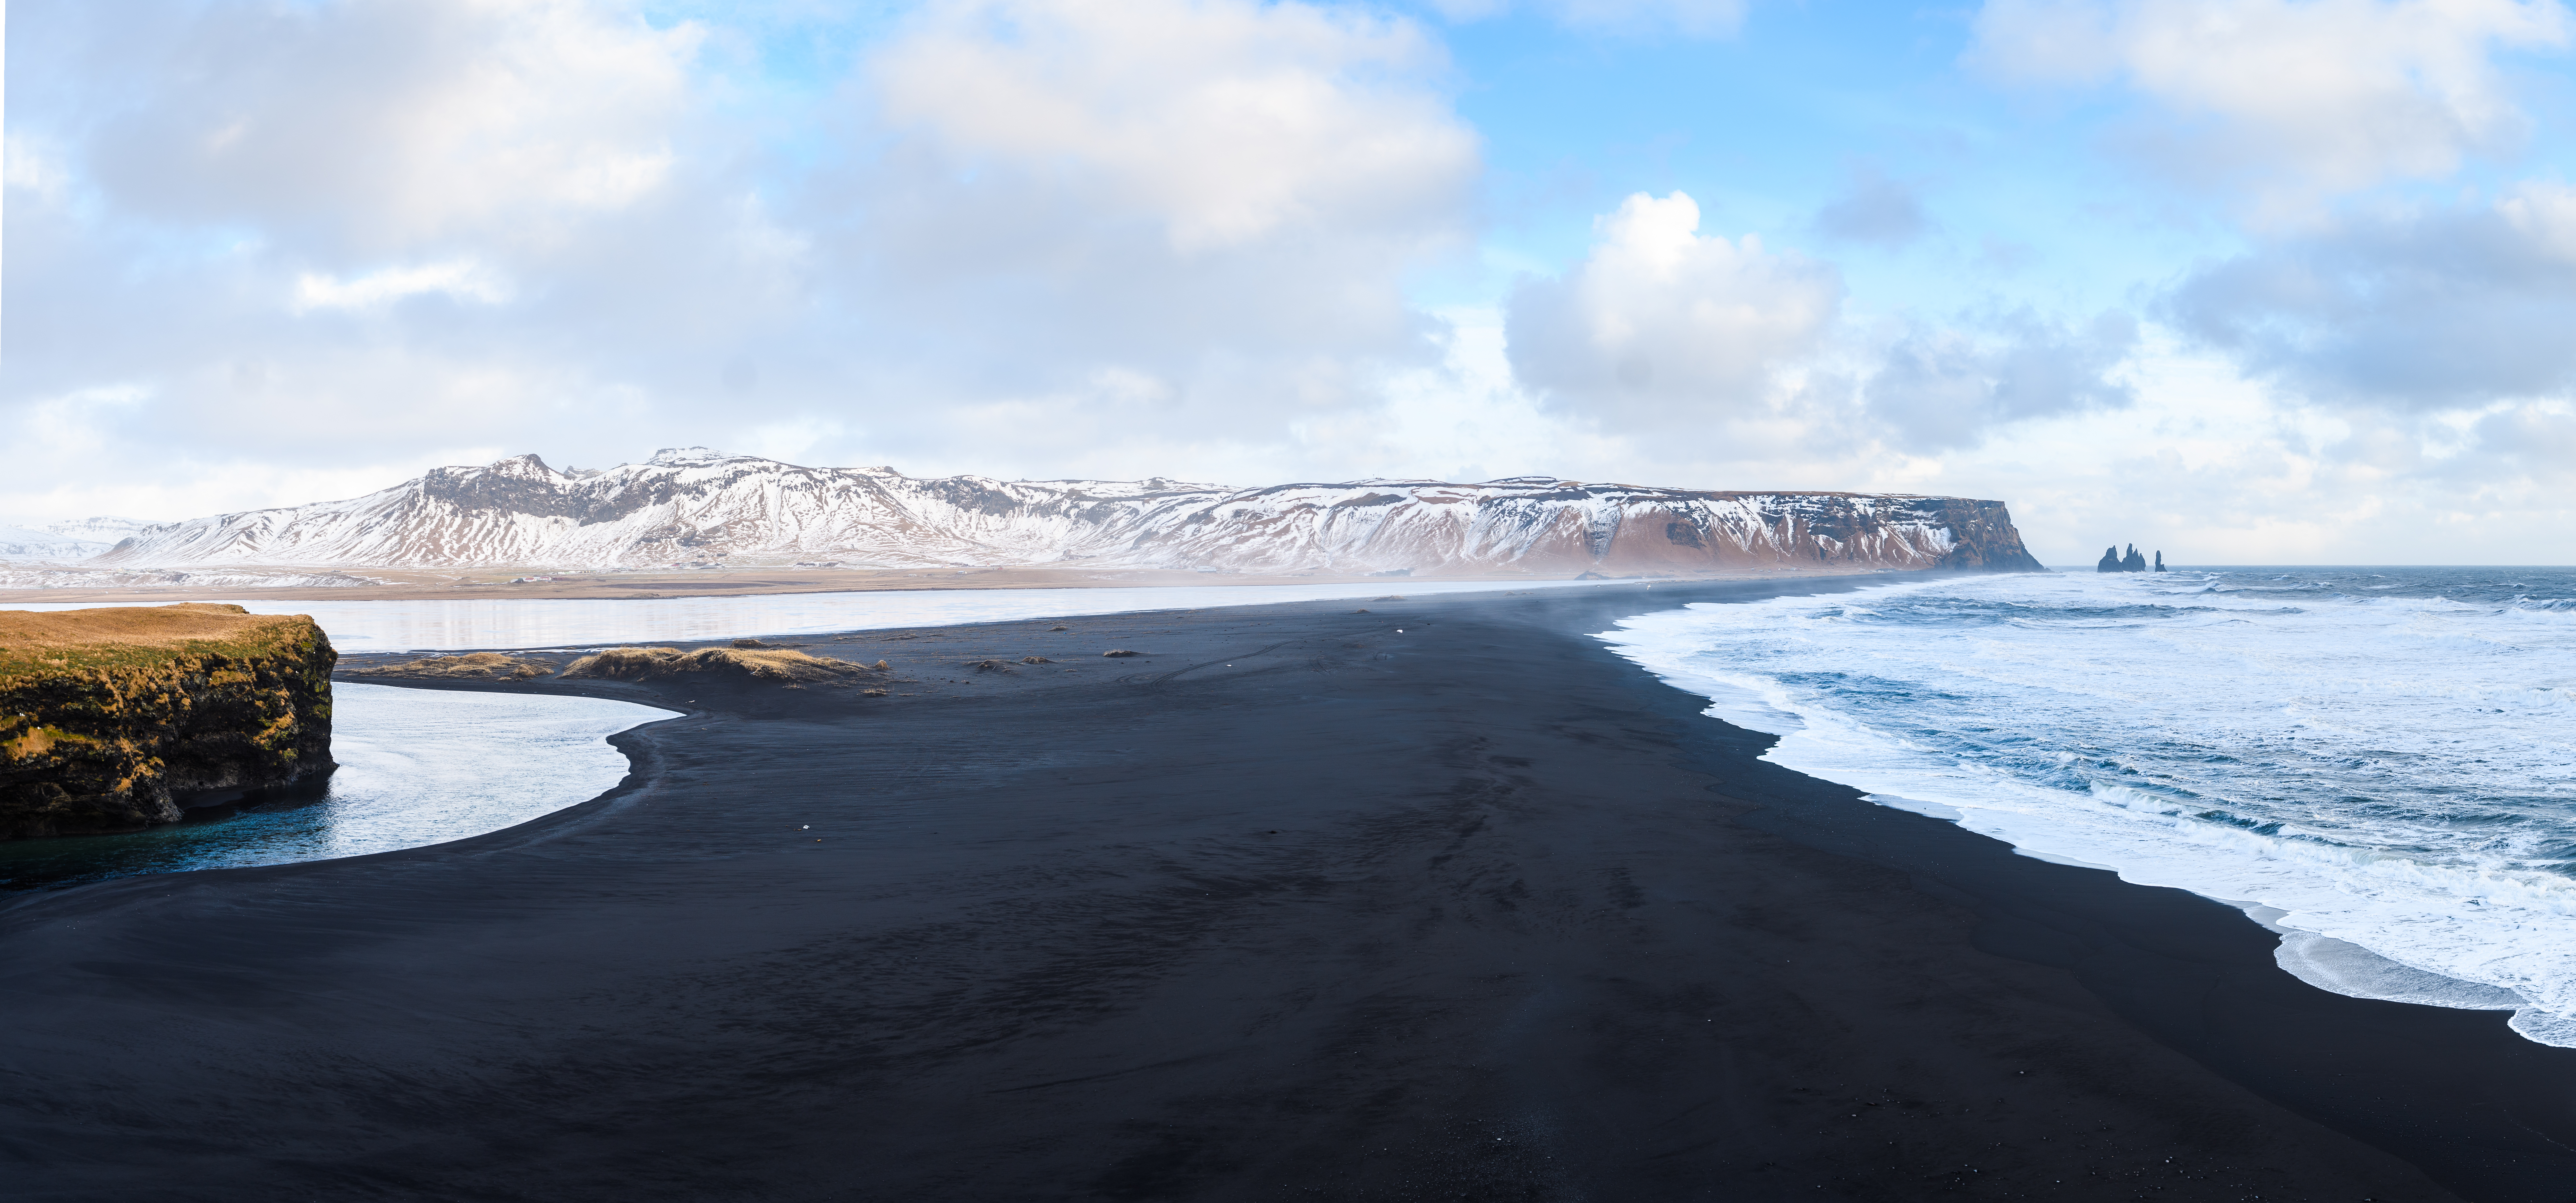 Volcanic Beaches to Visit - Reynisfjara Beach in Iceland